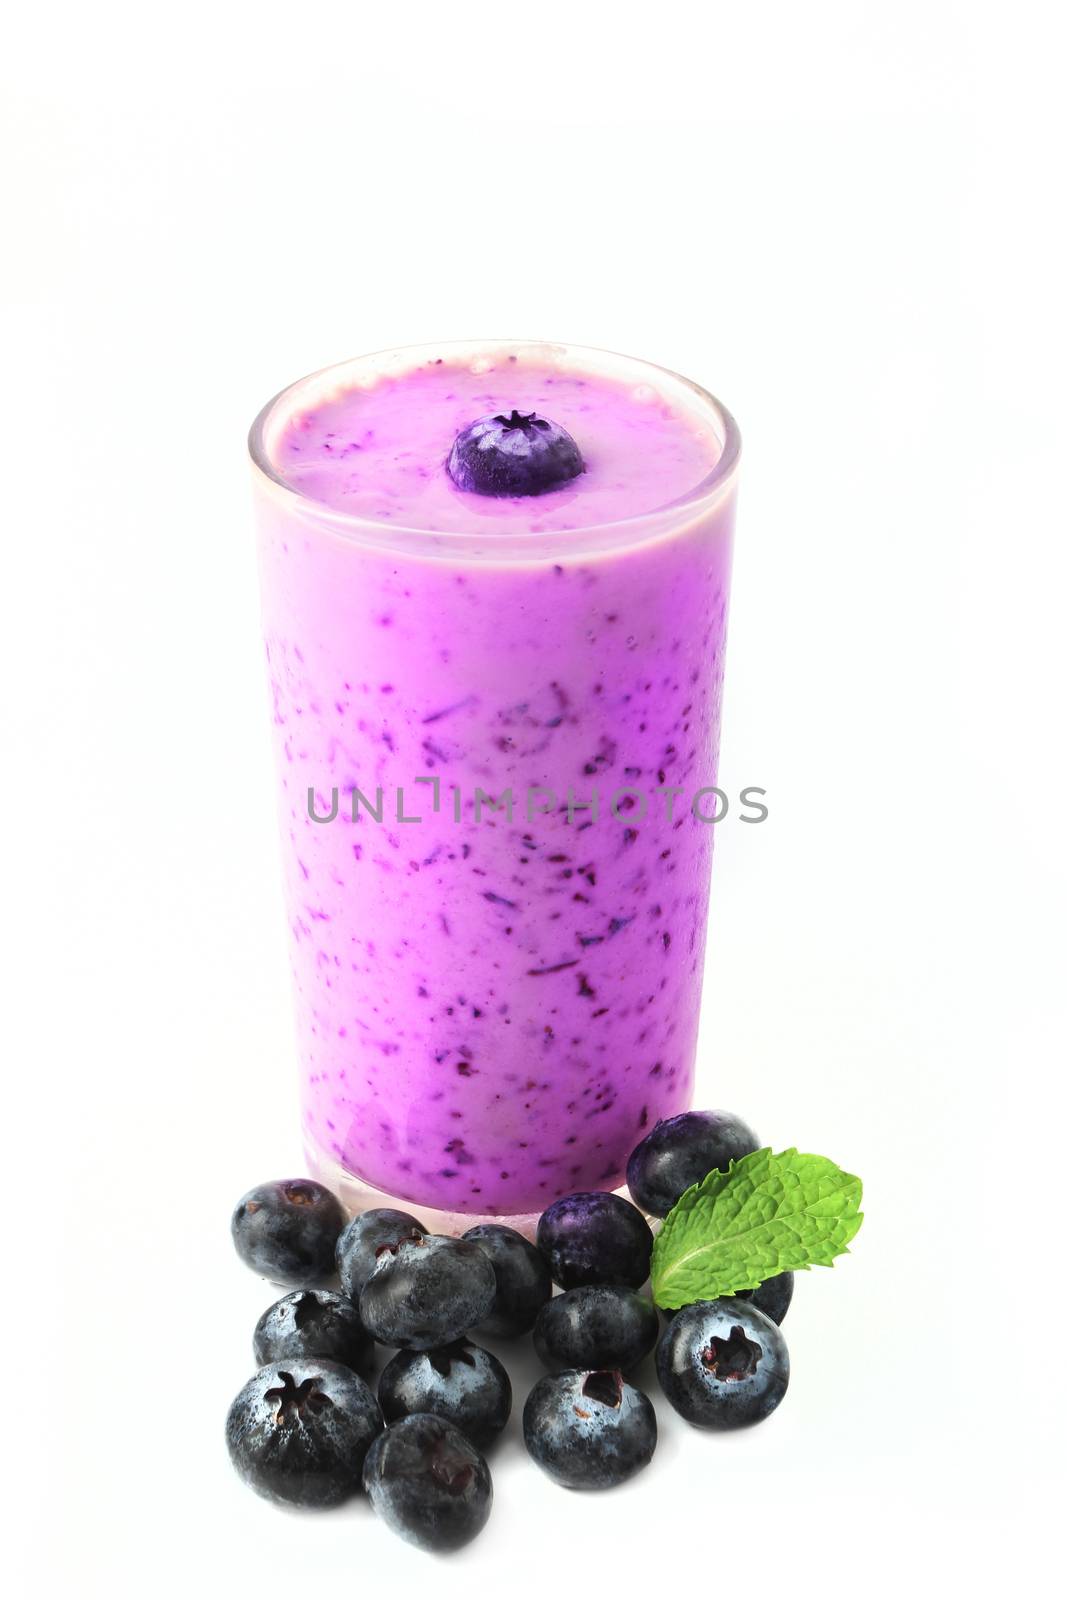 Blueberry smoothie by wyoosumran